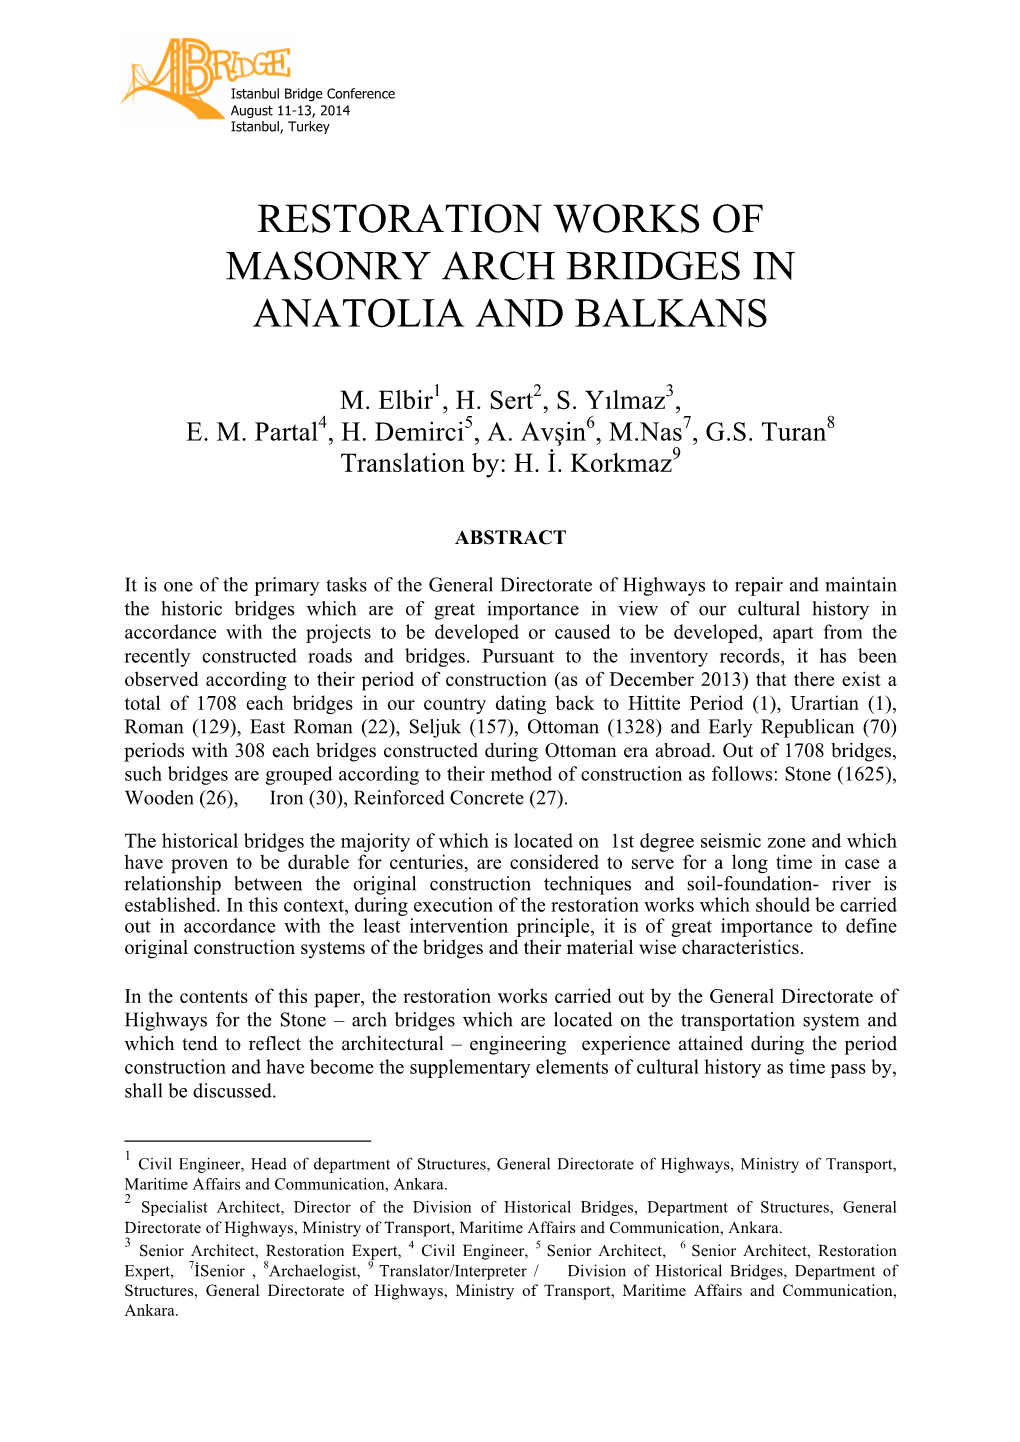 Restoration Works of Masonry Arch Bridges in Anatolia and Balkans